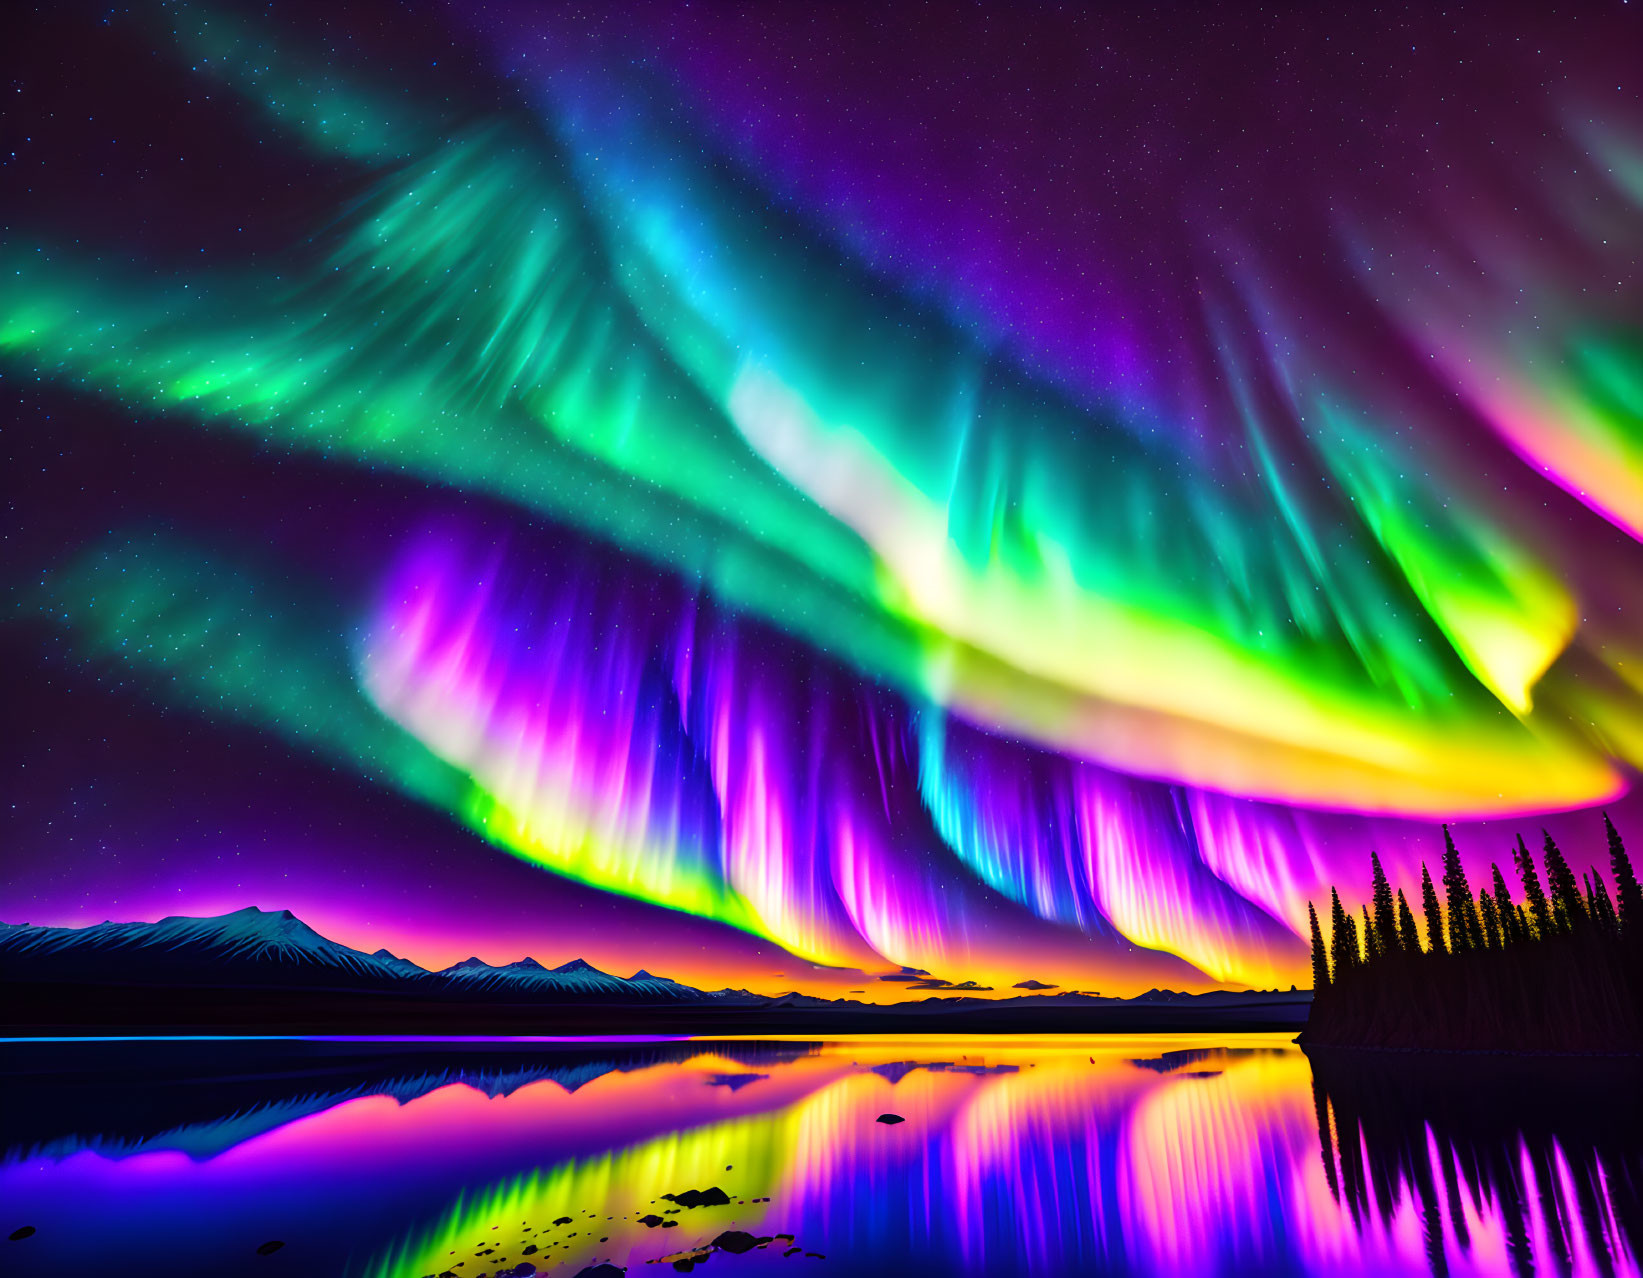 Stunning aurora borealis over Alaskan wilderness